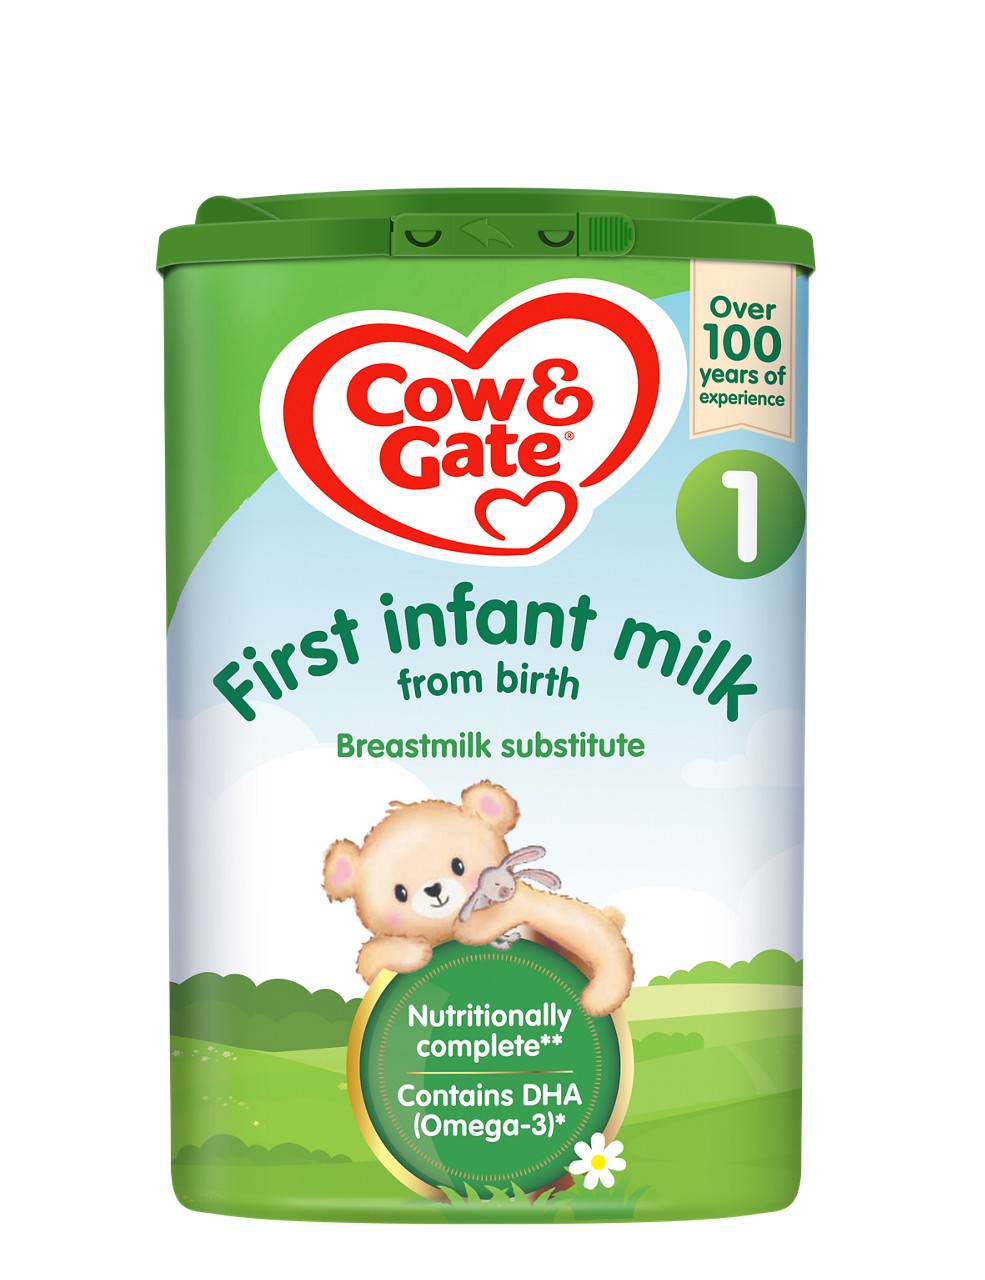 Cow & Gate First Infant milk (Powder) 800g